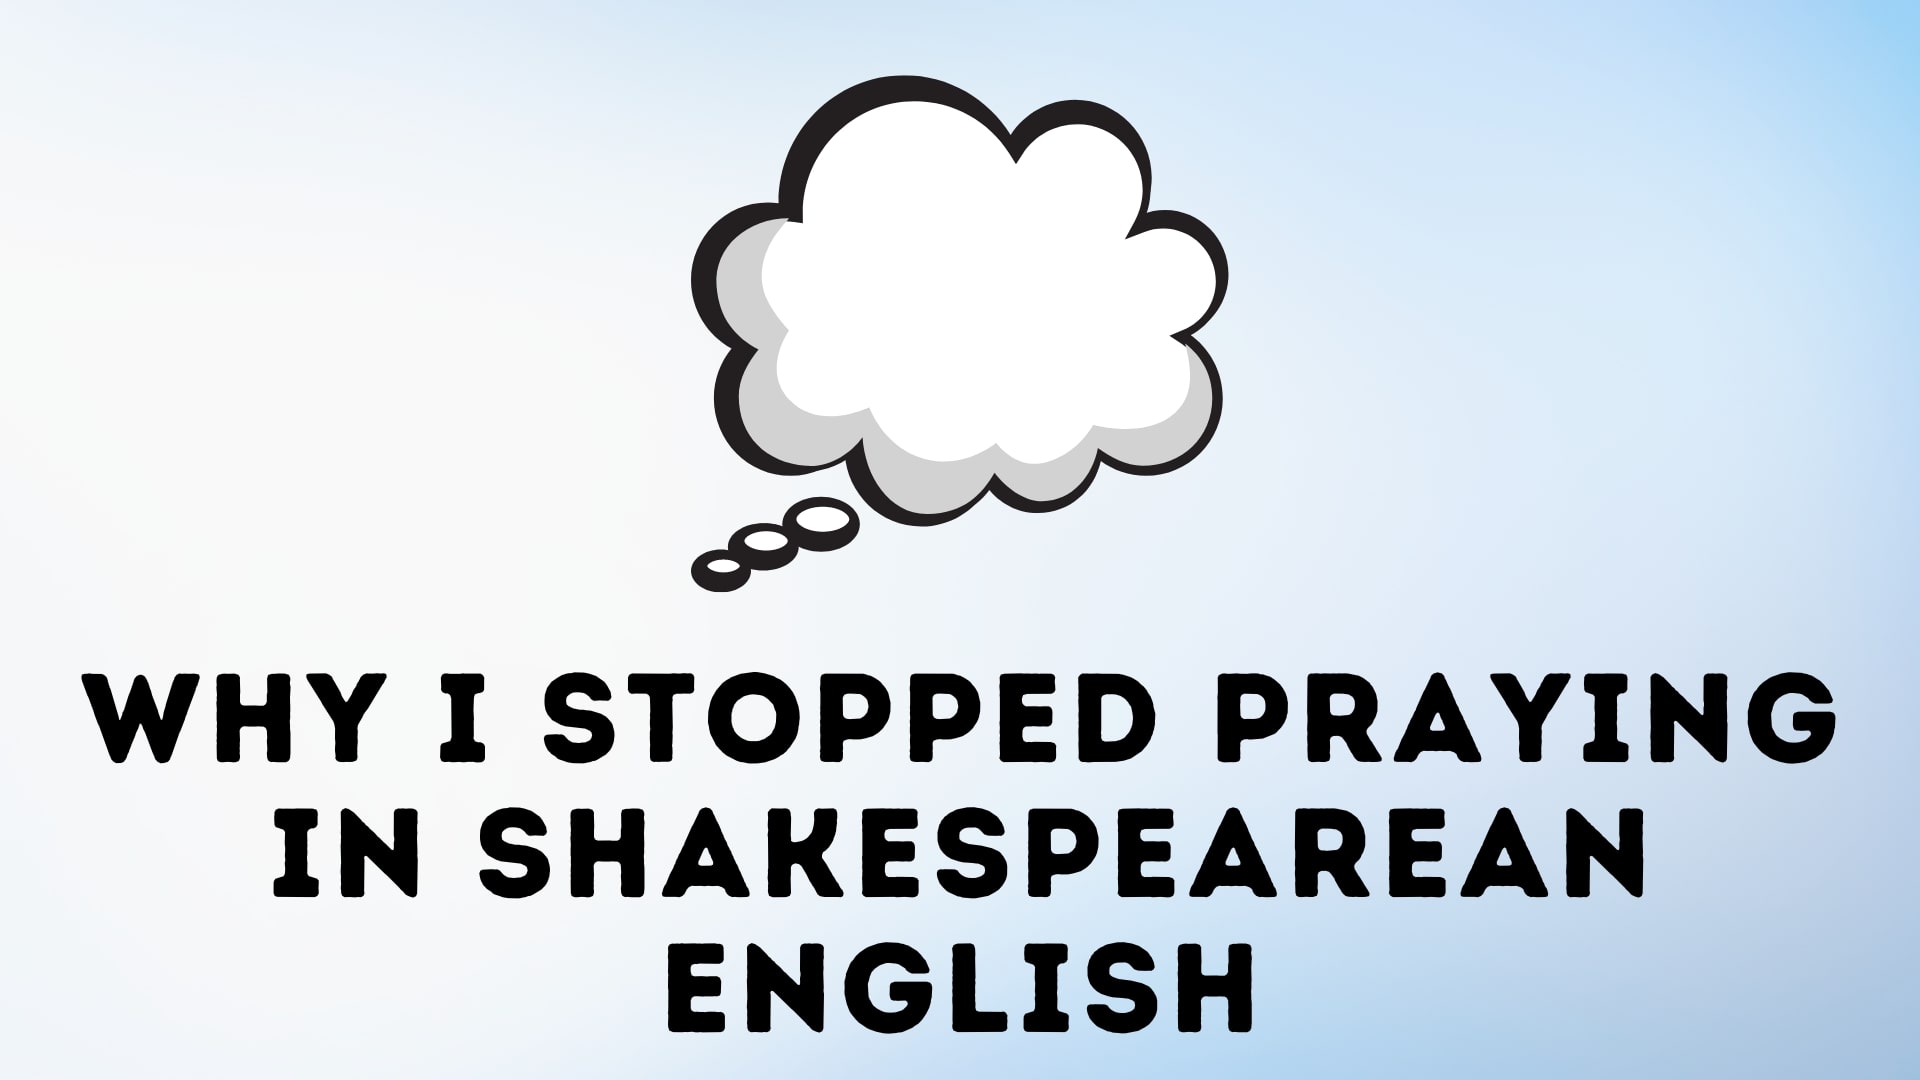 Why I Stopped Praying in Shakespearean English